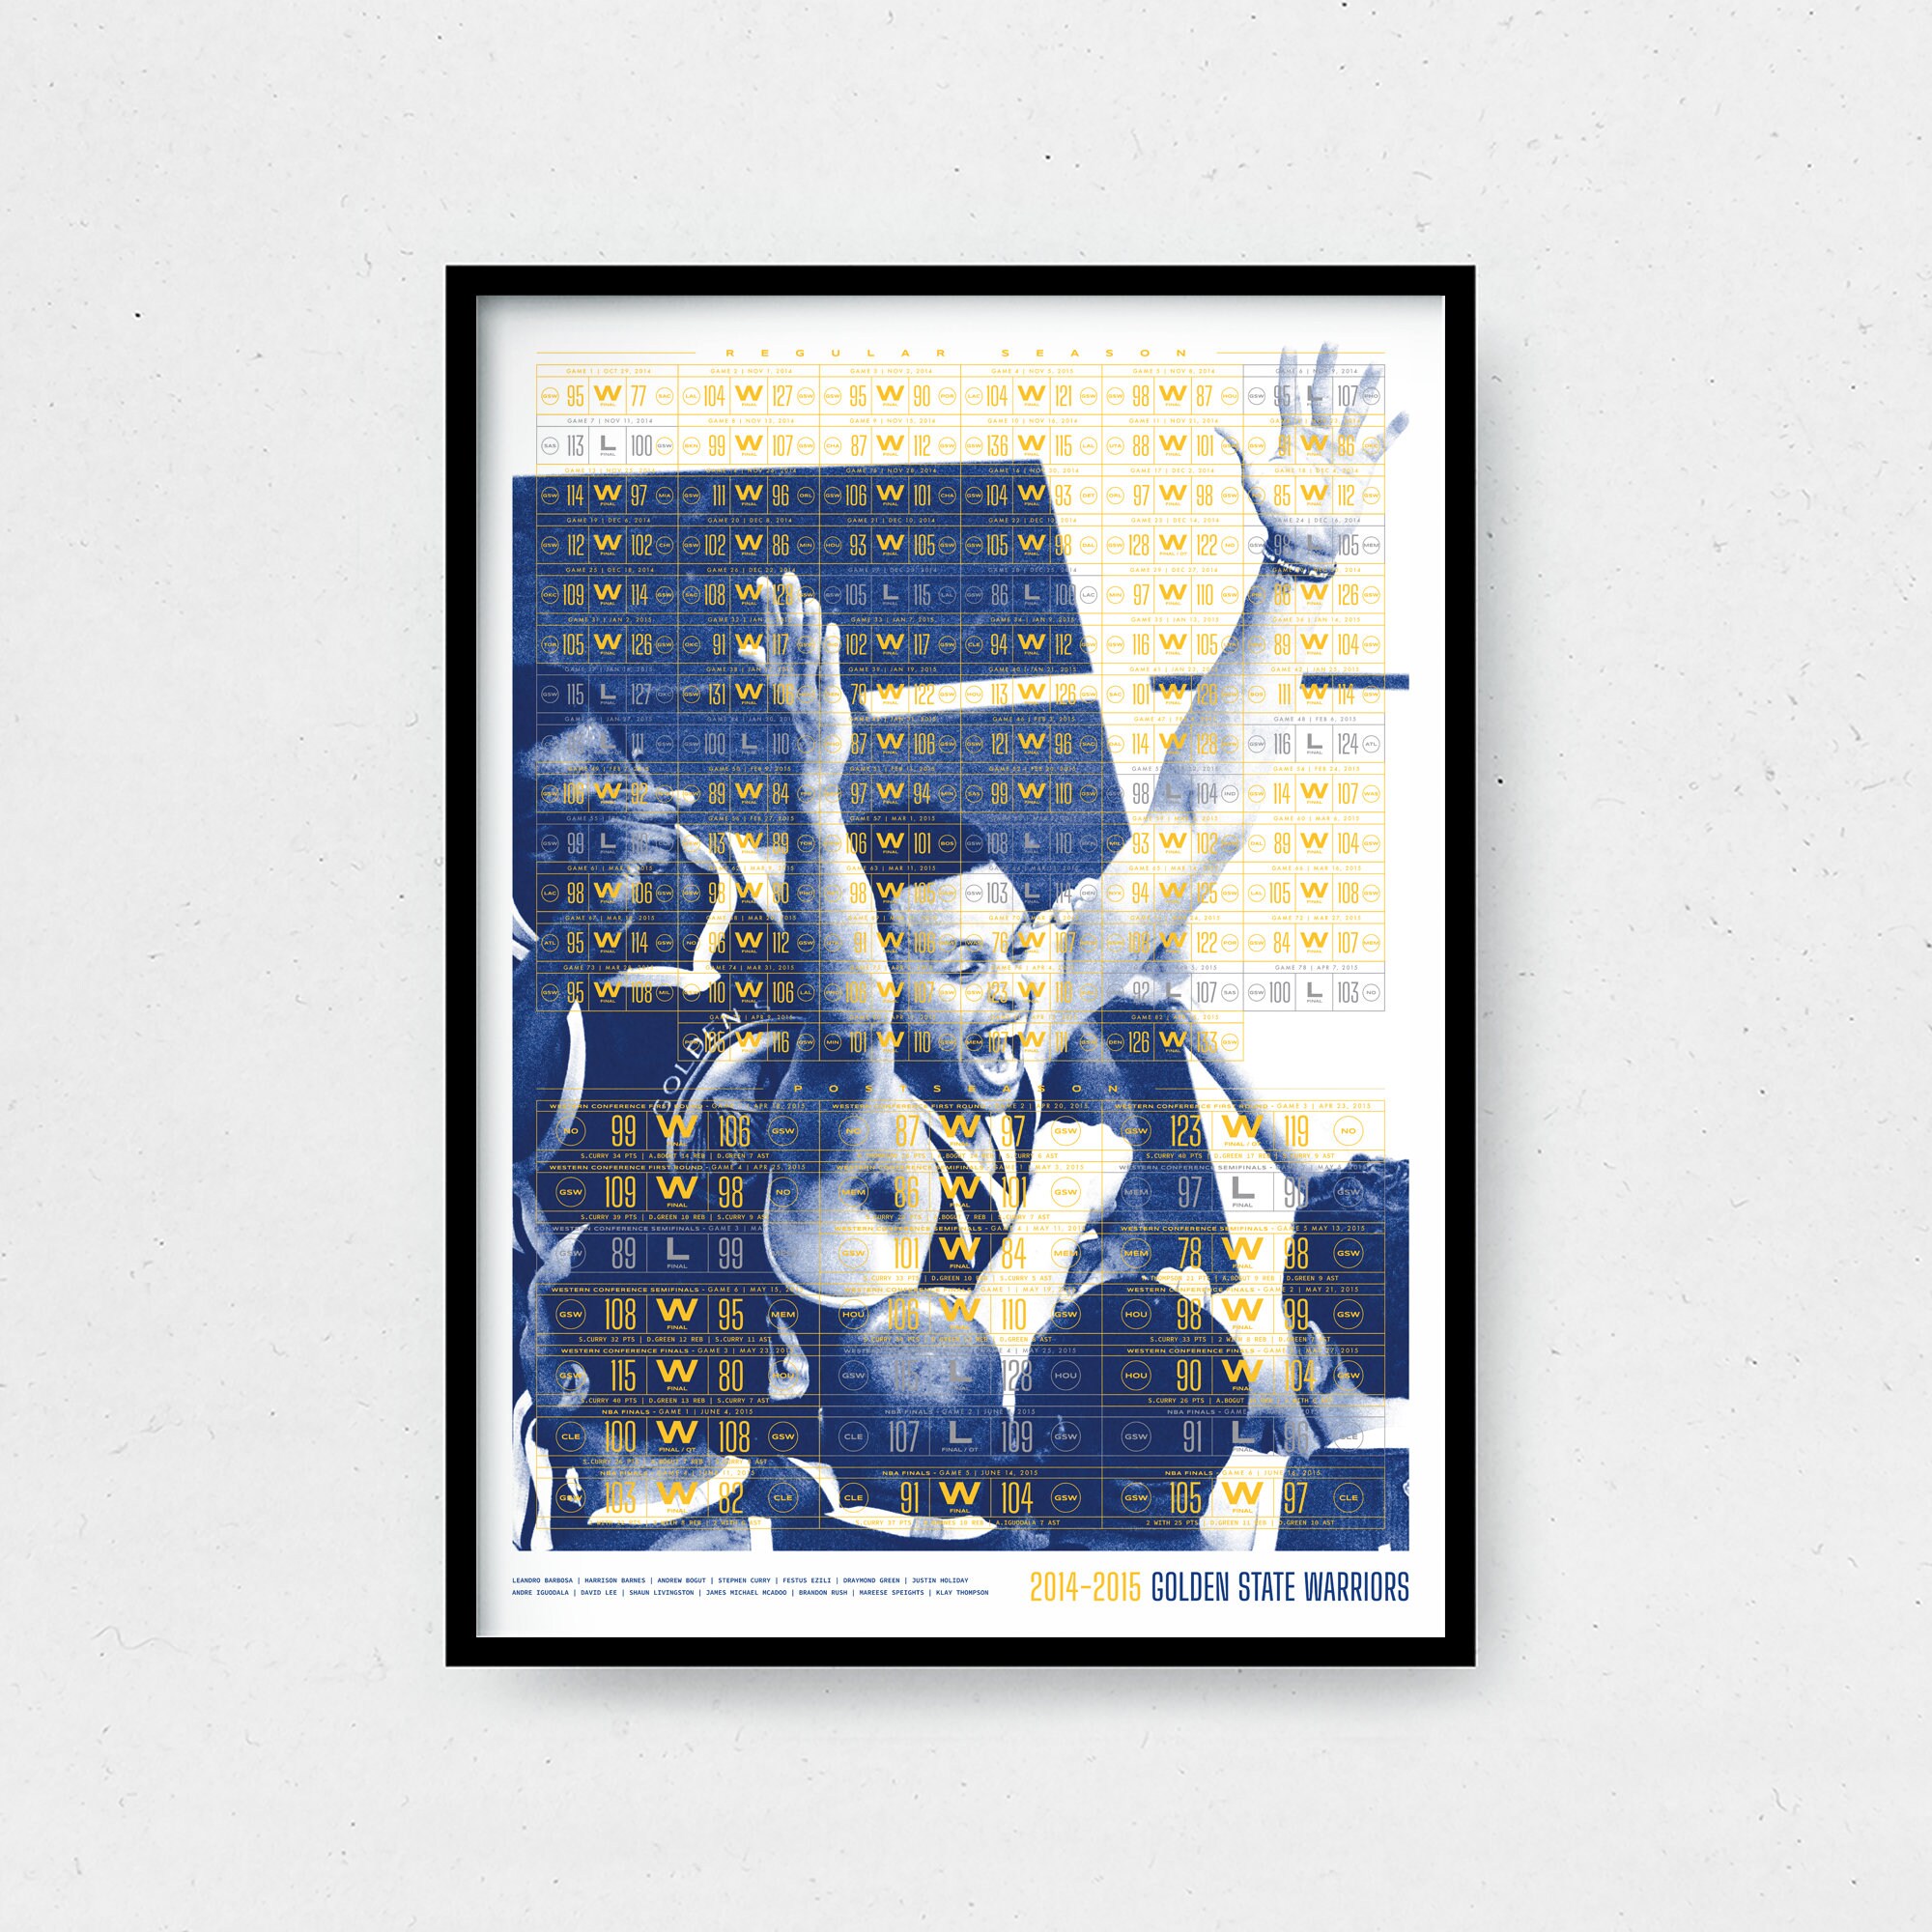 Golden State Warriors poster print - Steph Curry  2014-2015 NBA season